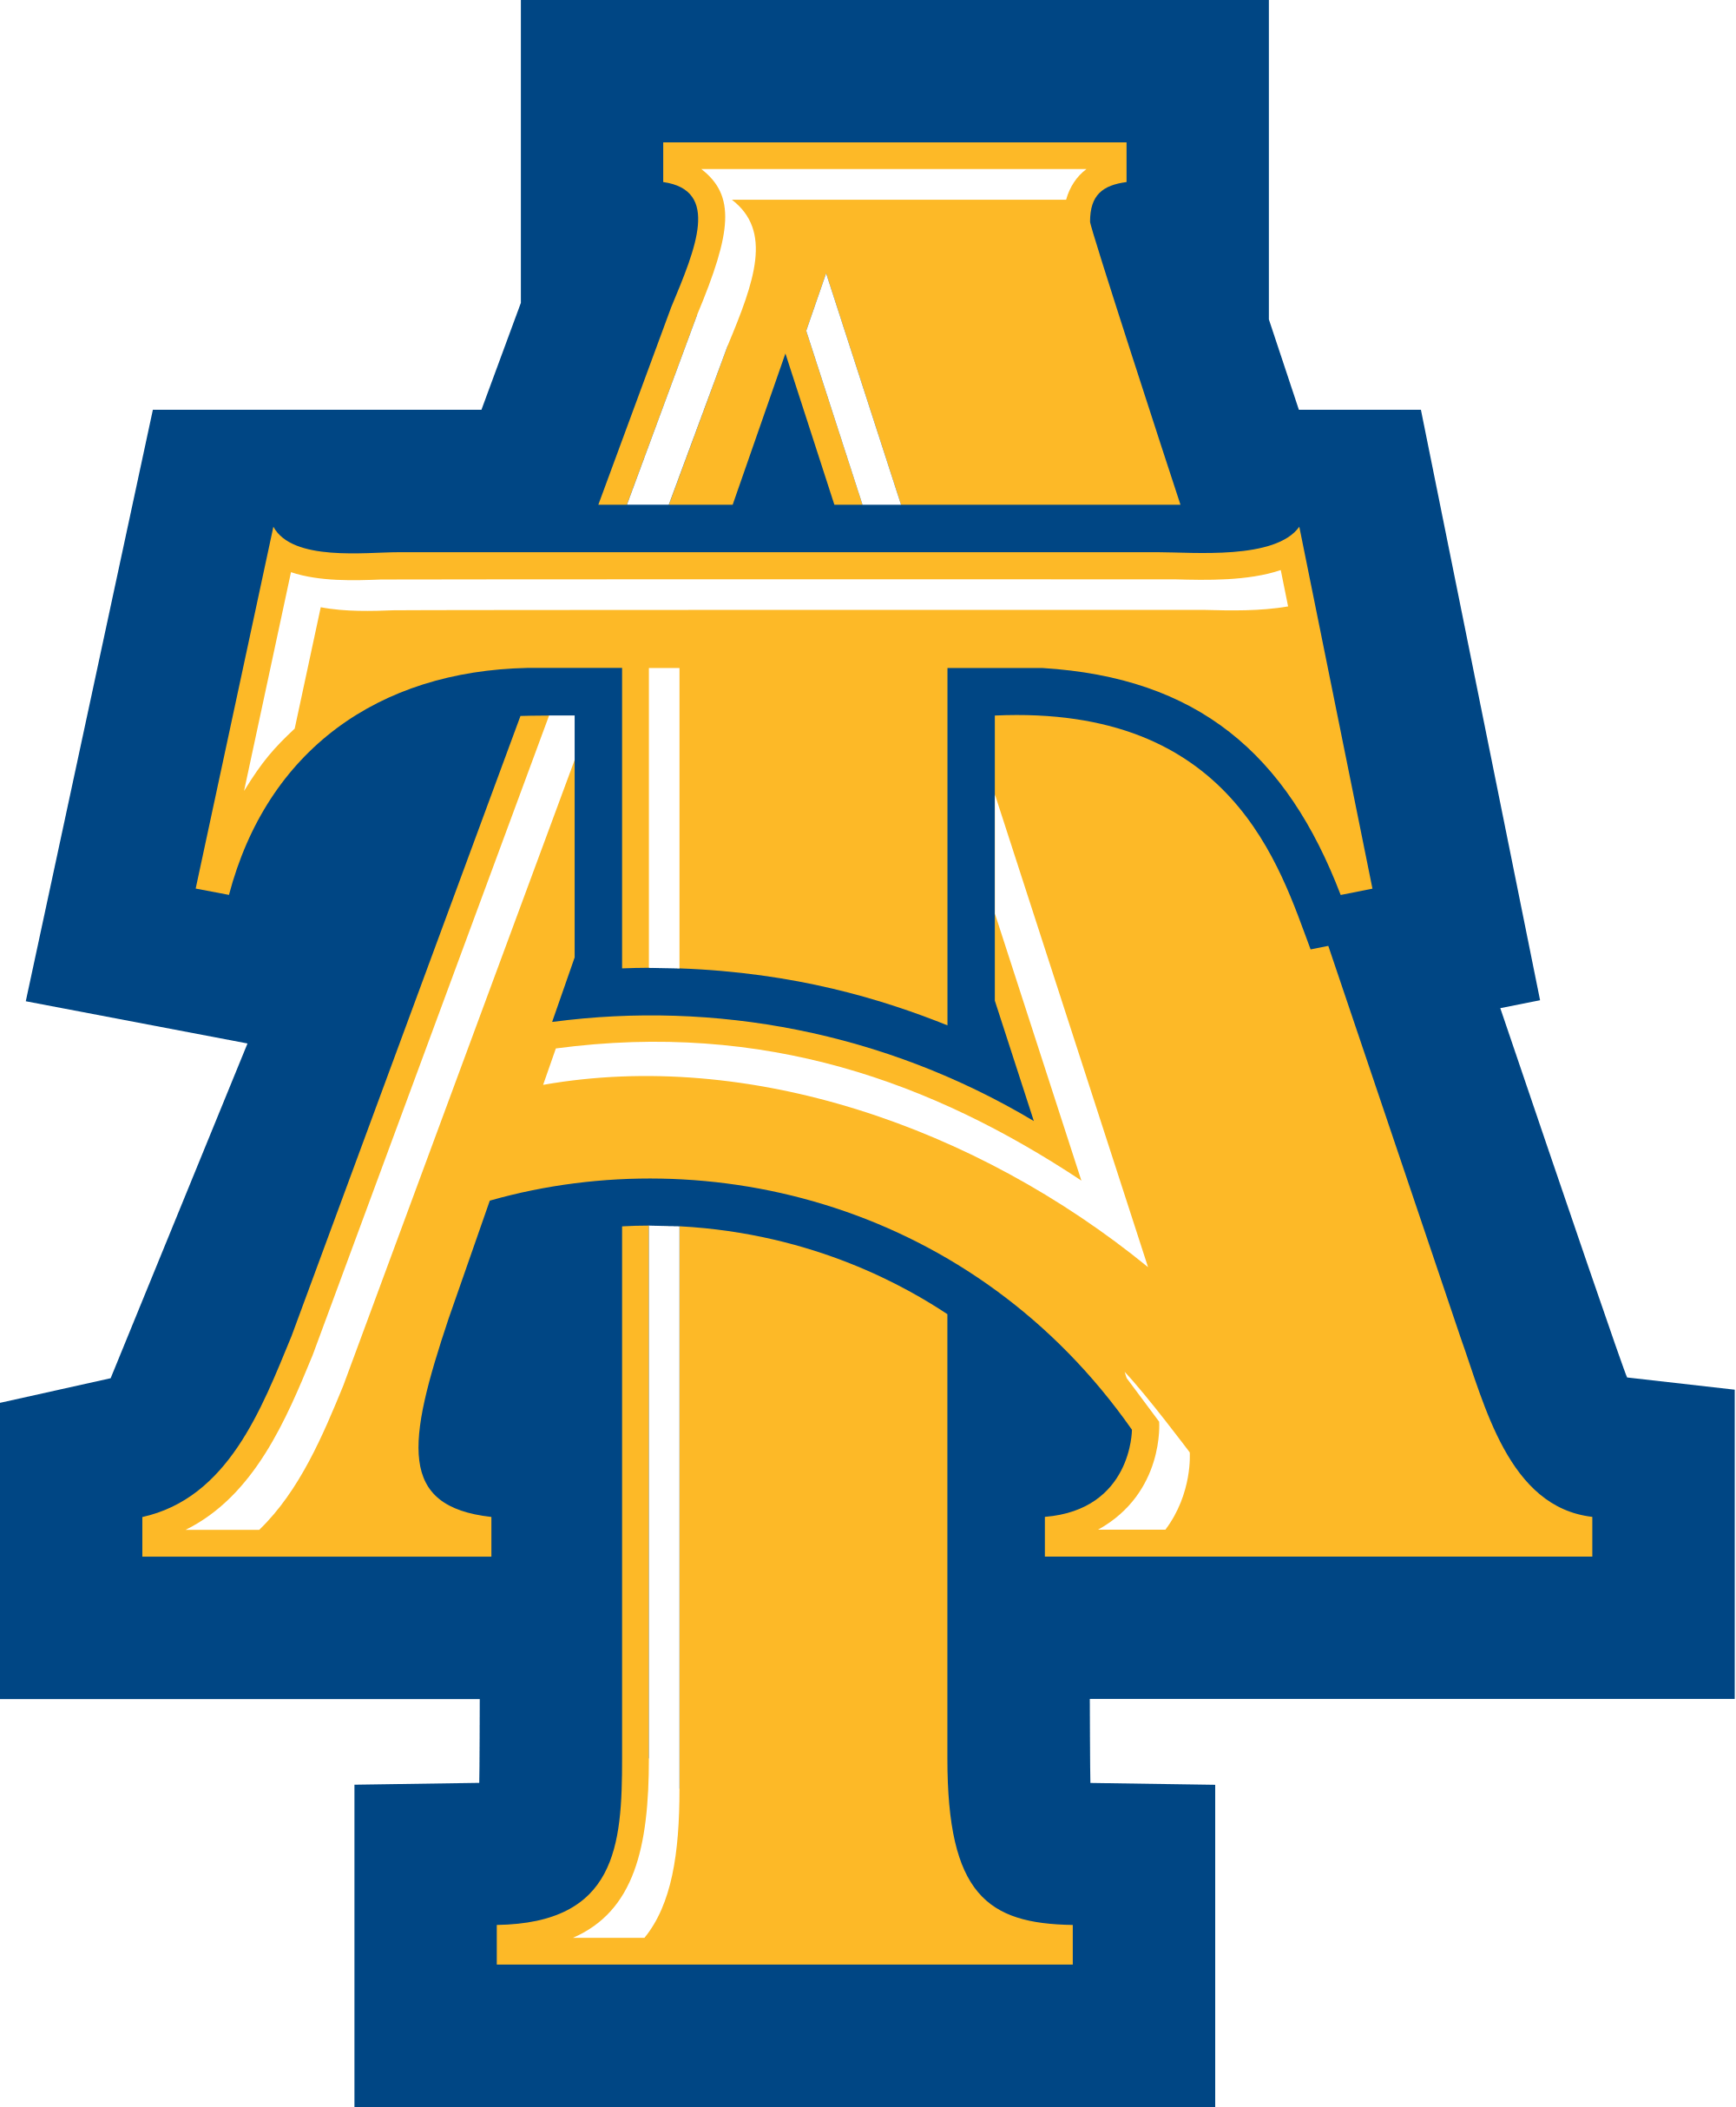 Aggies Logo - File:North Carolina A&T Aggies logo.svg - Wikimedia Commons